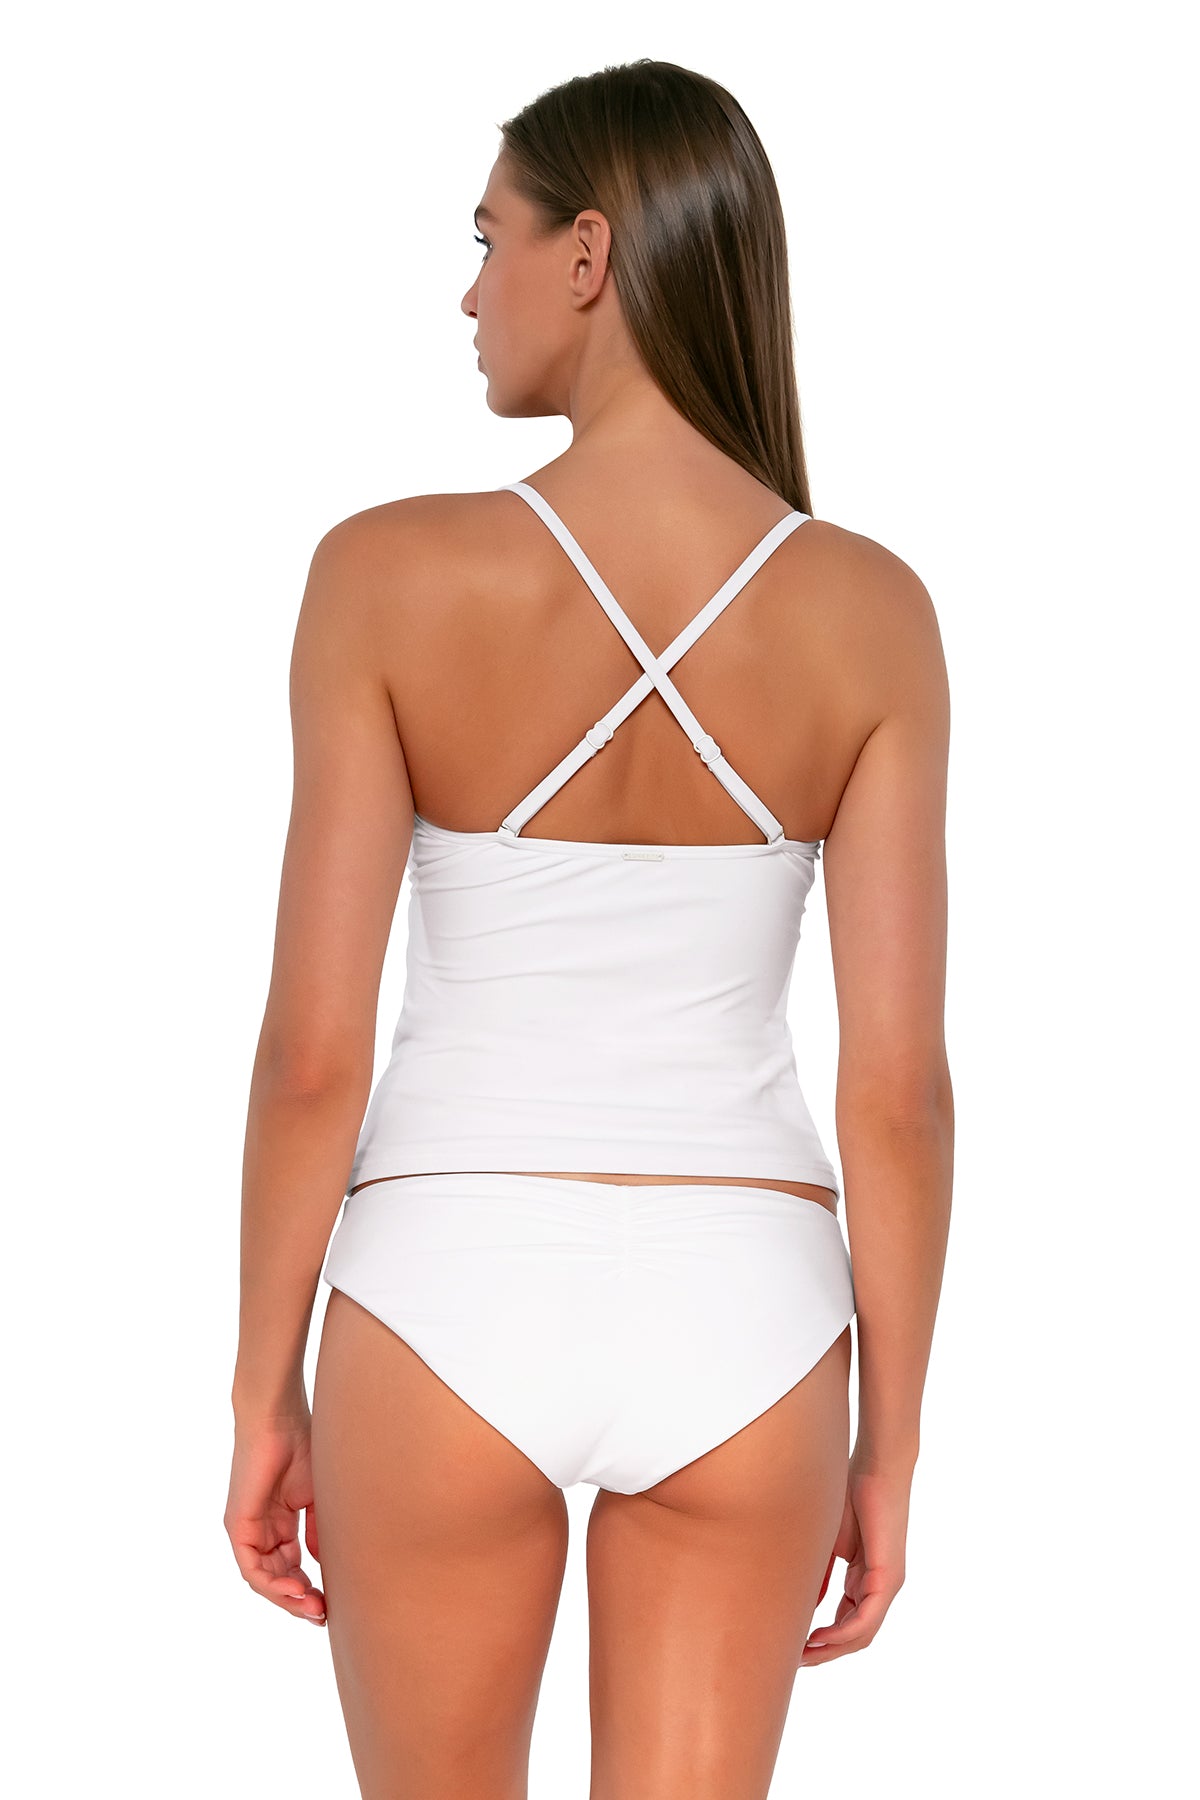  Back pose #1 of Daria wearing Sunsets White Lily Simone Tankini Topshowing crossback straps with matching Alana Reversible Hipster bikini bottom